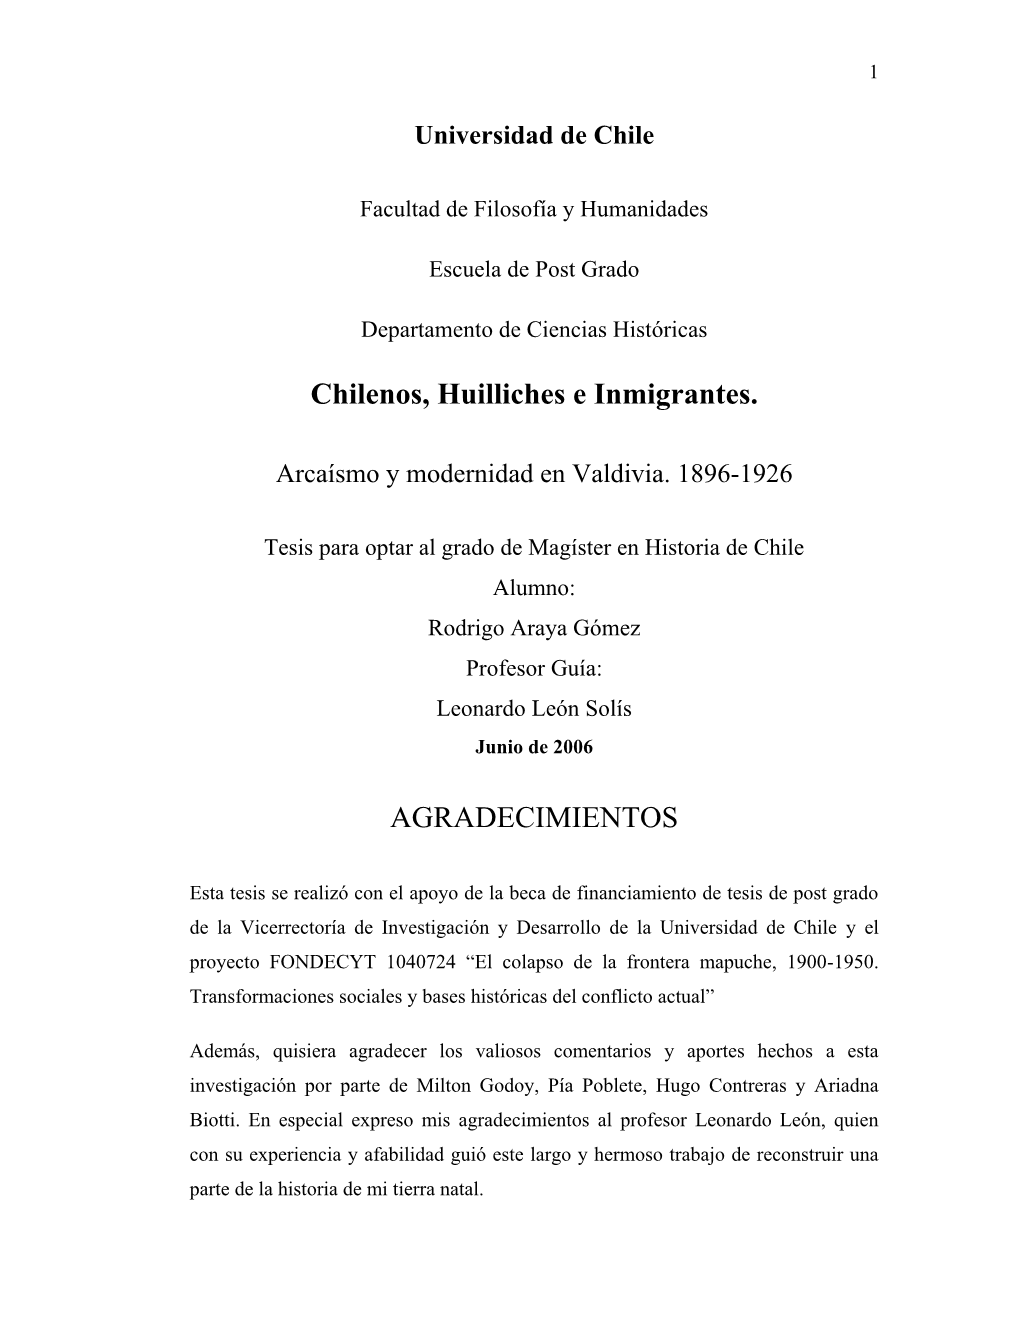 Chilenos, Huilliches E Inmigrantes. AGRADECIMIENTOS